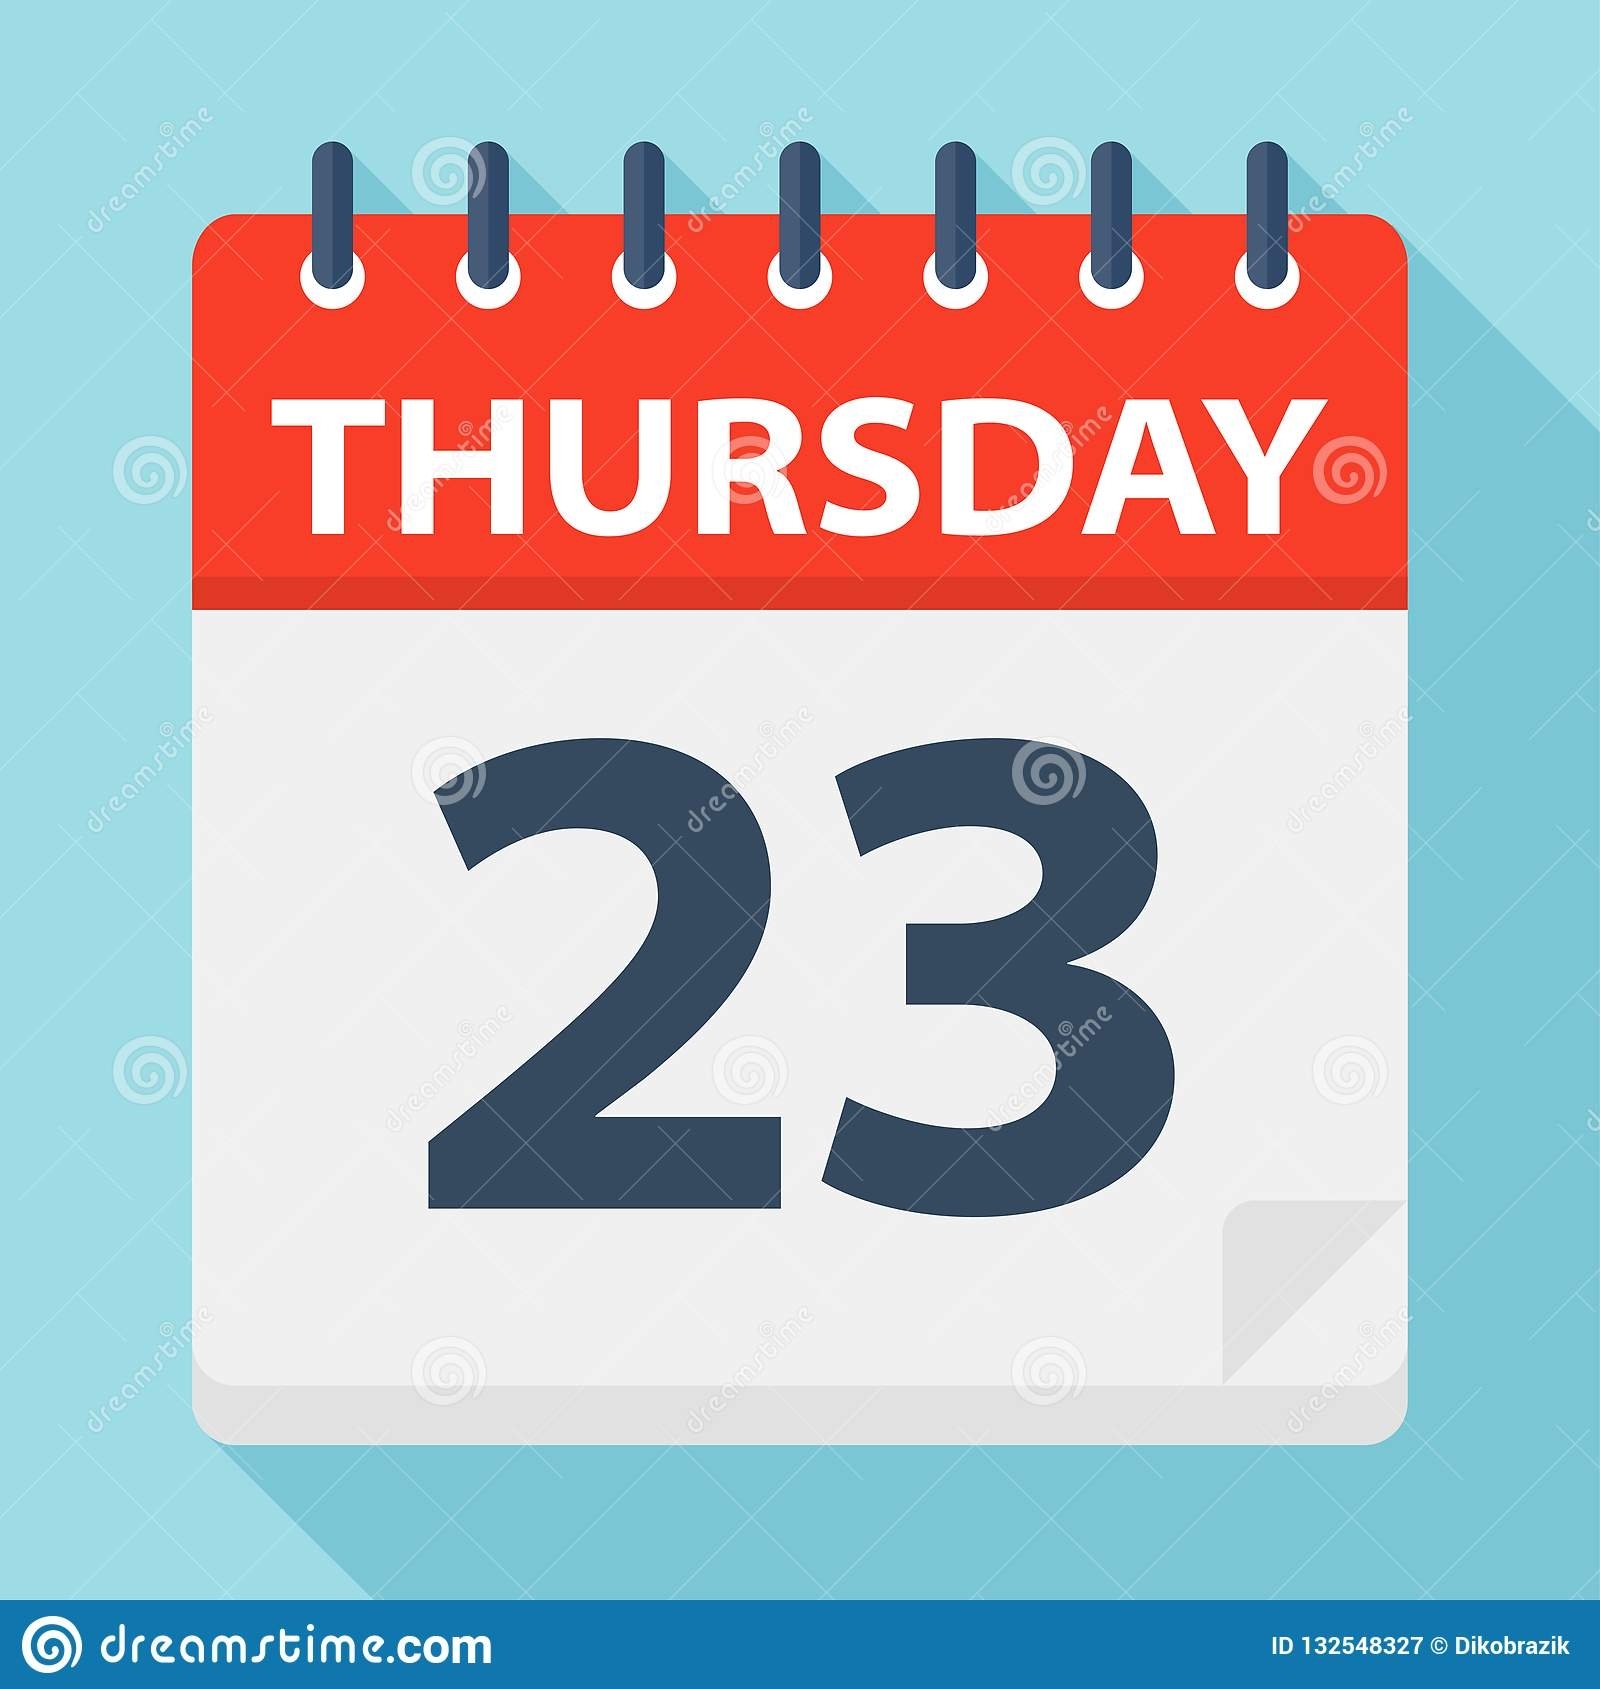 Thursday 23 - Calendar Icon. Vector Illustration Of Week Day